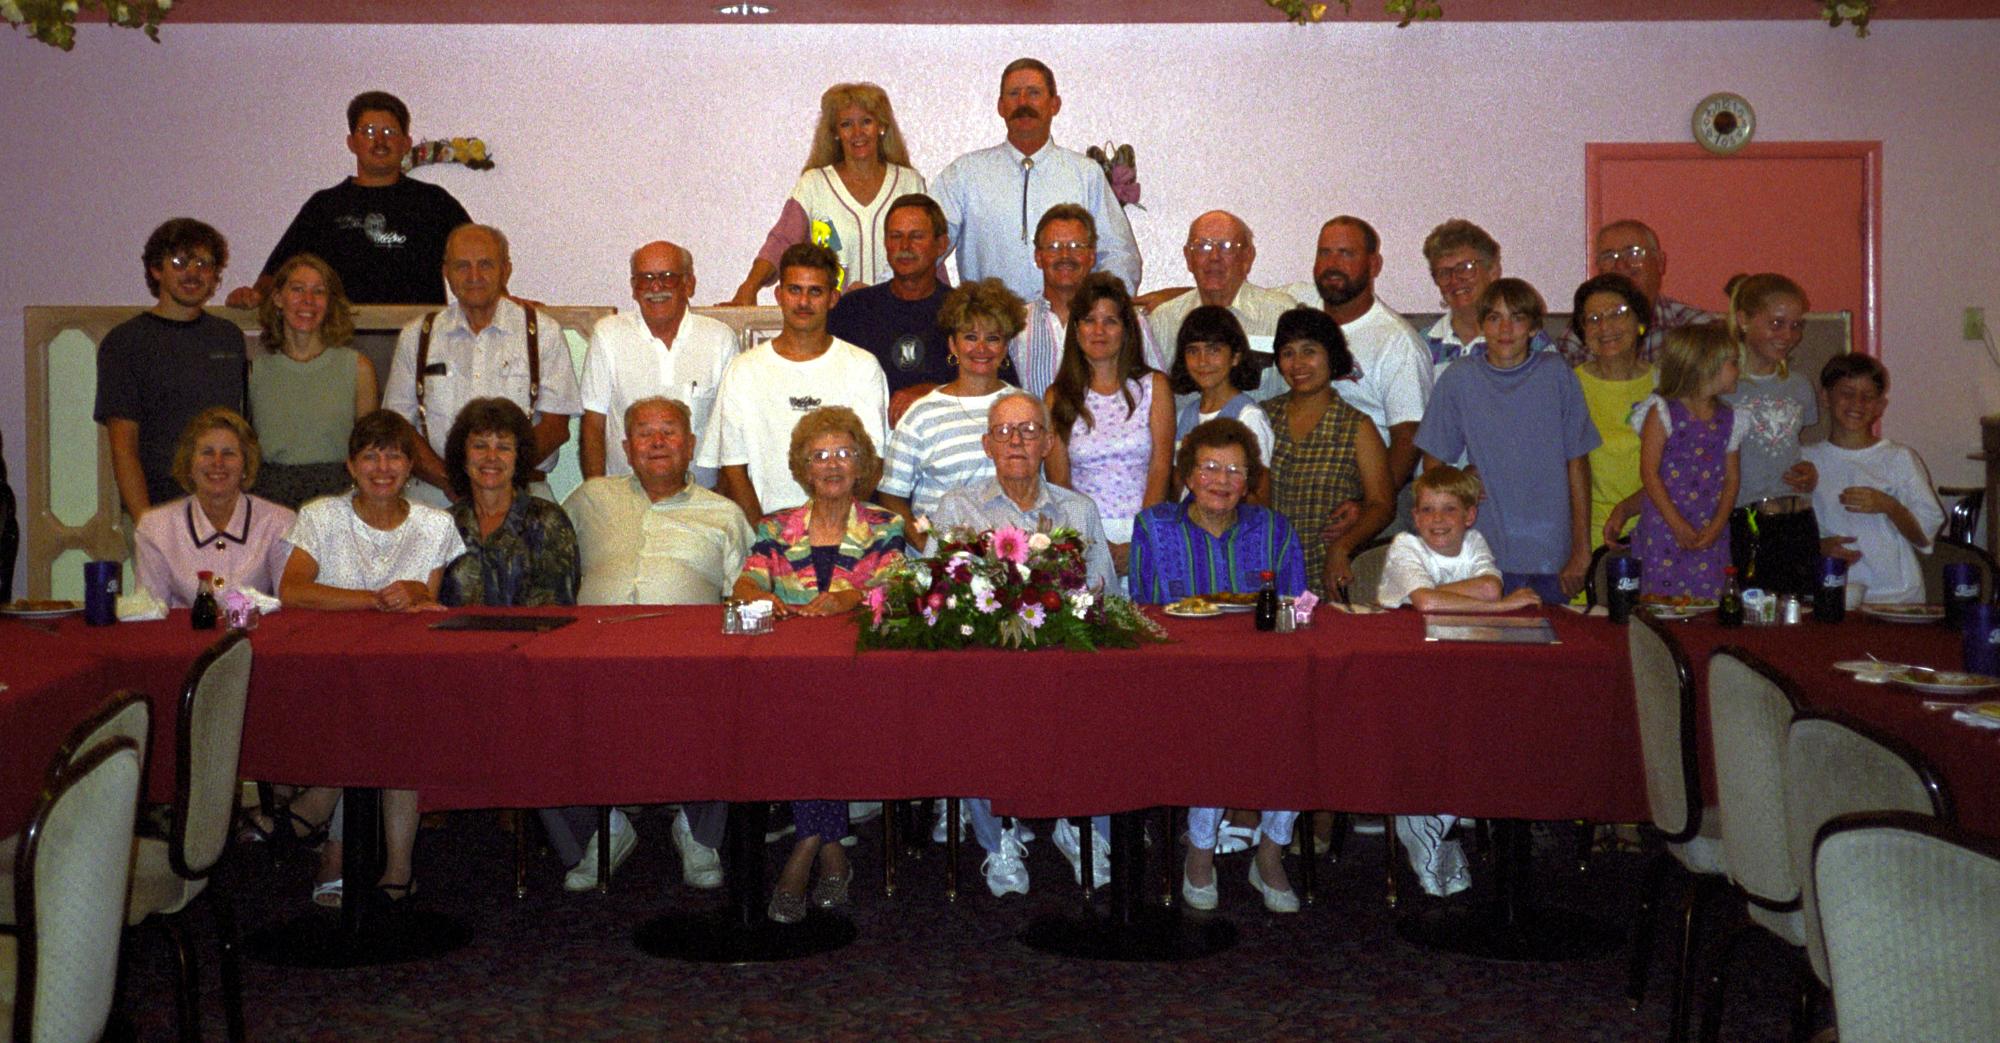 Marie's 80th Birthday - Group Photo